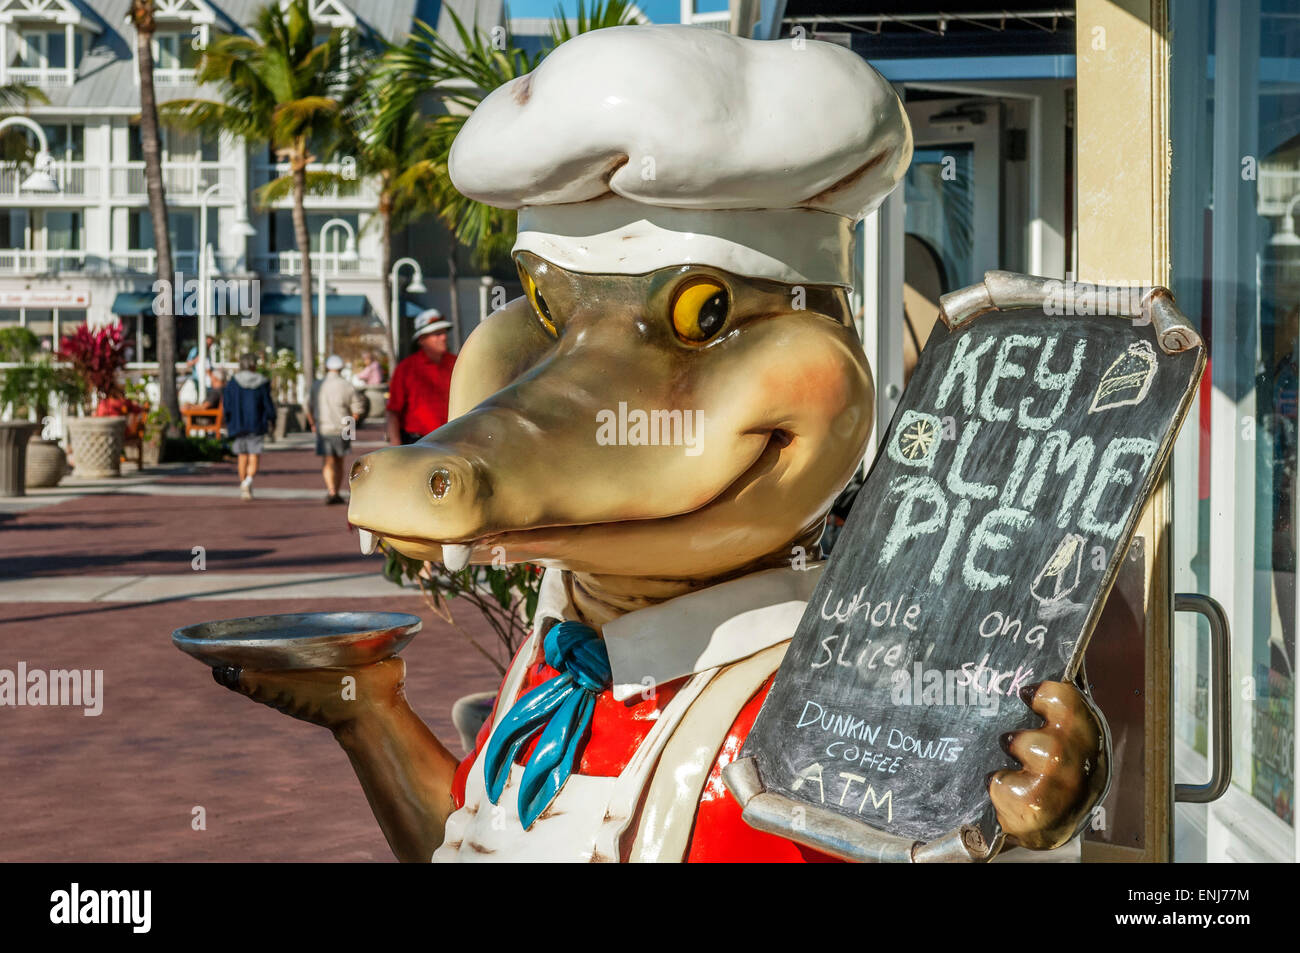 Gator Joe's alligator chef statue in Key West advertising Key Lime Pie. Key West.Florida Keys. USA Stock Photo